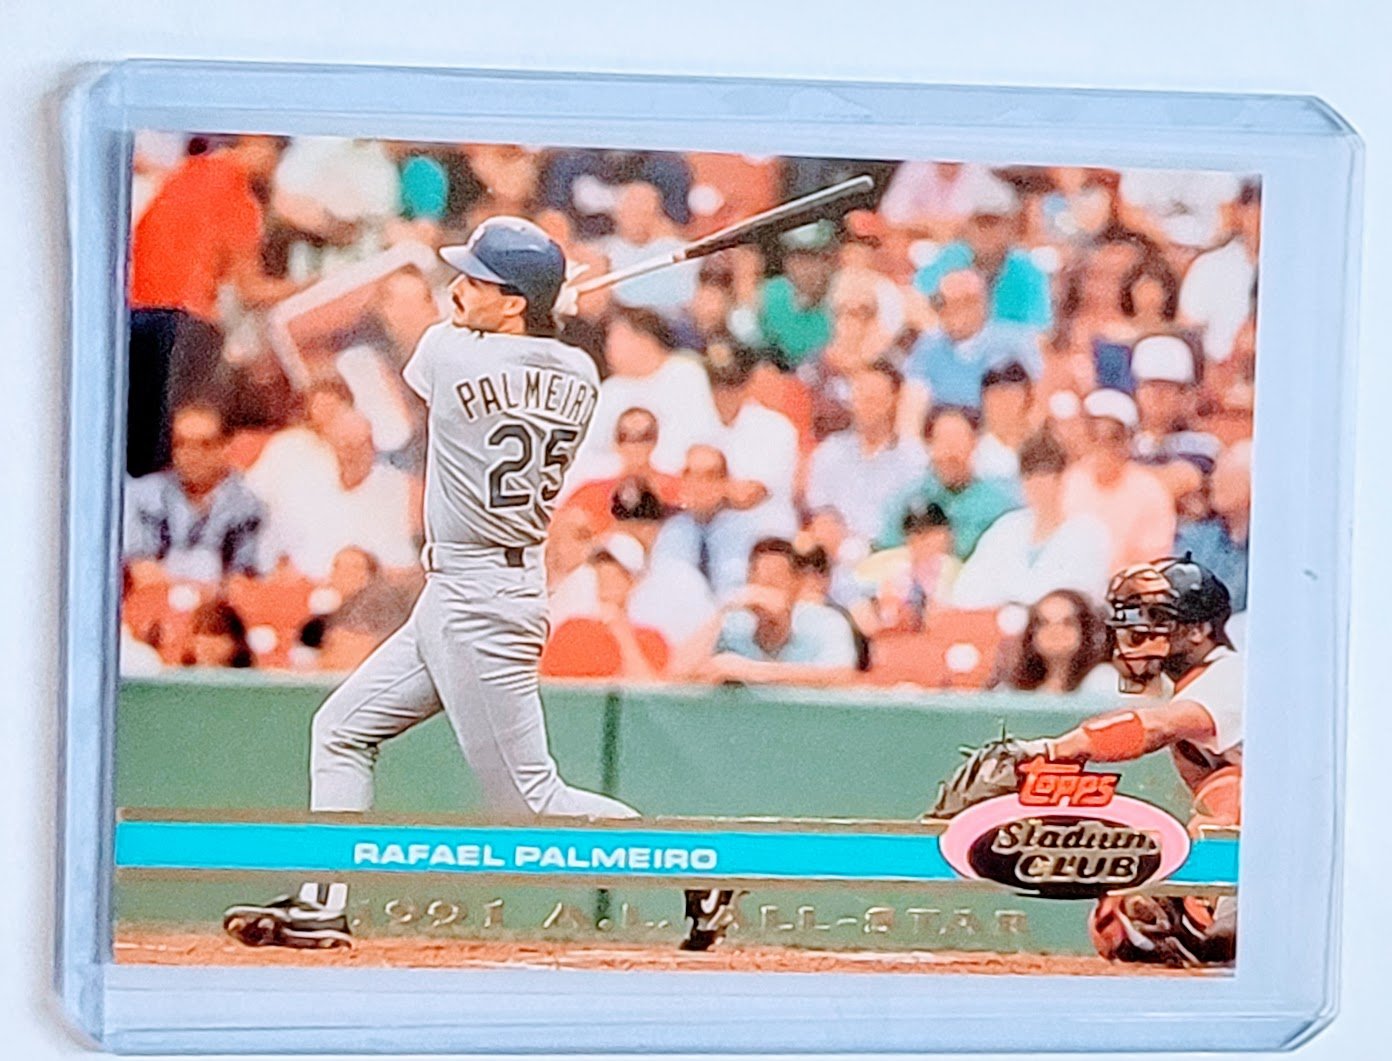 1992 Topps Stadium Club Dome Rafael Palmeiro 1991 All Star MLB Baseball Trading Card TPTV simple Xclusive Collectibles   